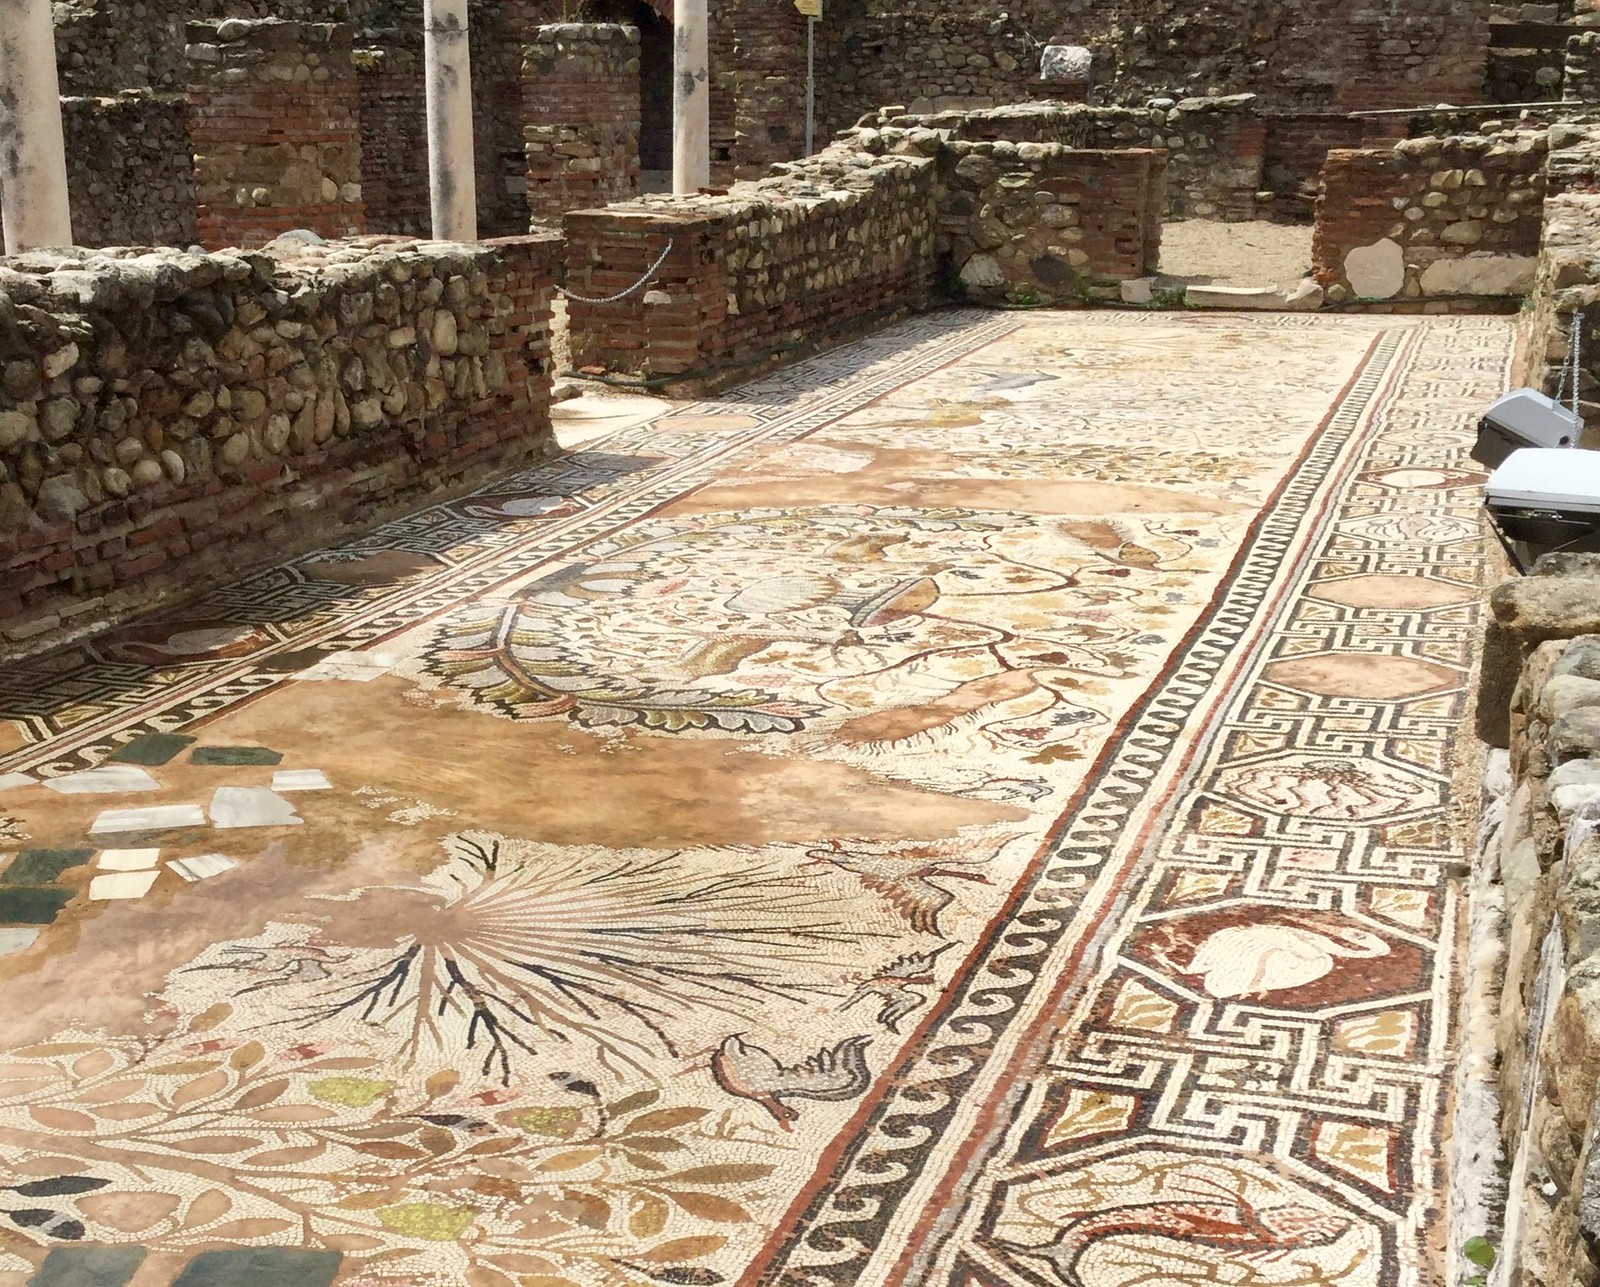 201705 - Balkans - Heraclea Lyncestis Ancient Roman Mosaics - 59 of 89 - Bitola, May 27, 2017